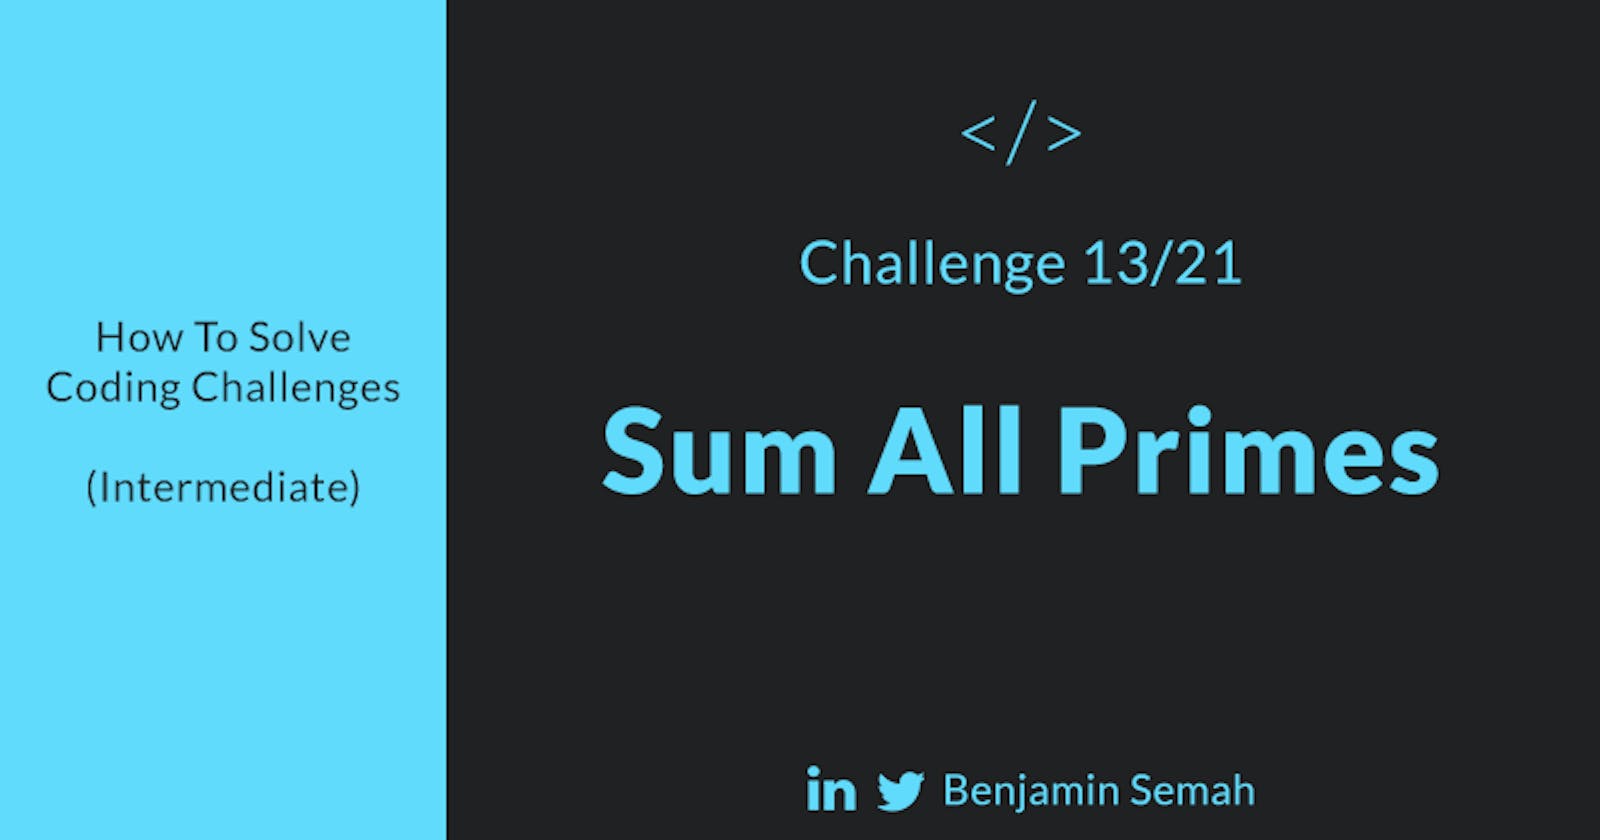 Sum All Primes - JavaScript Solution and Walkthrough